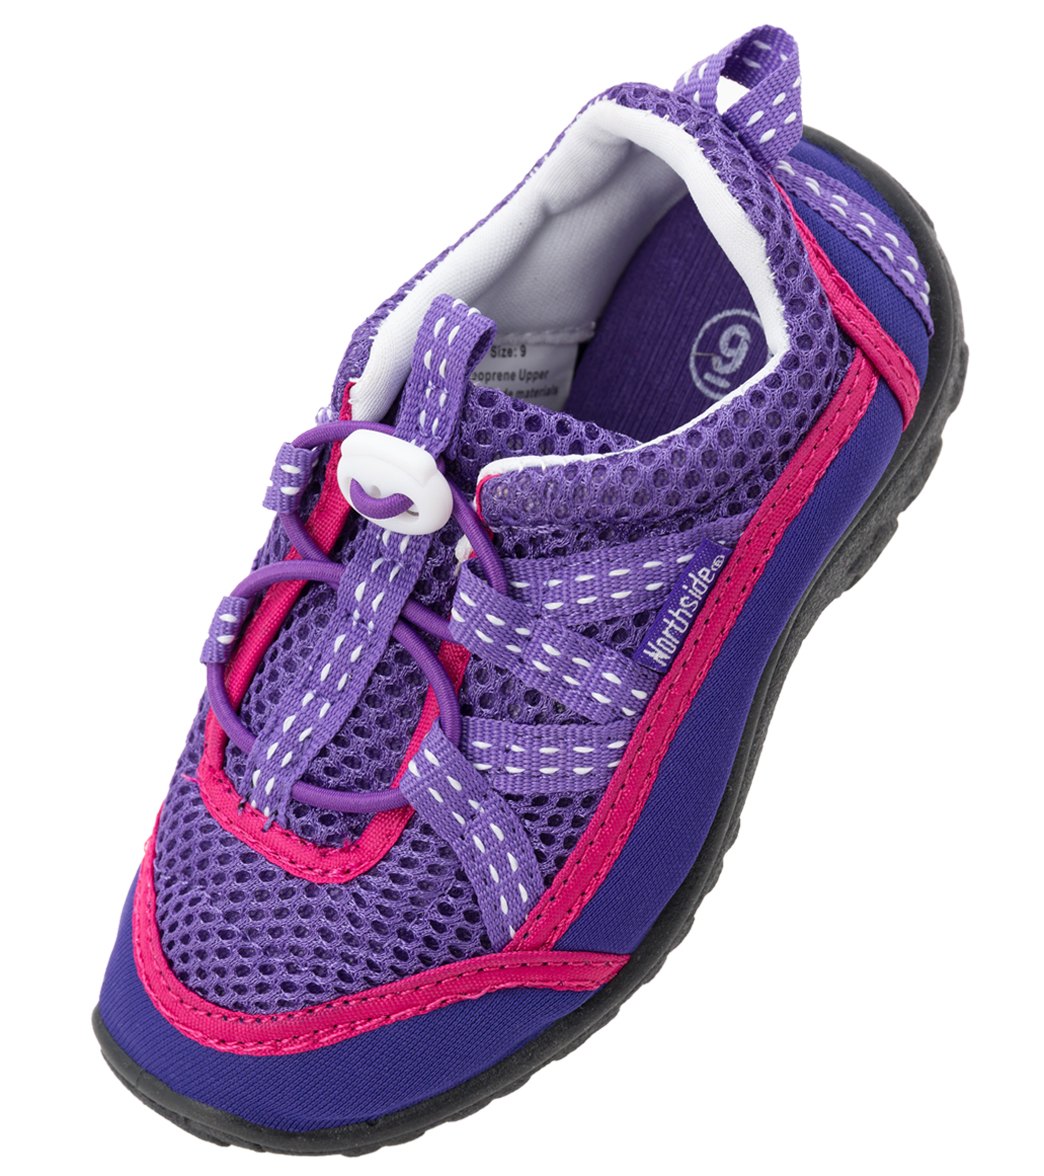 little girls water shoes